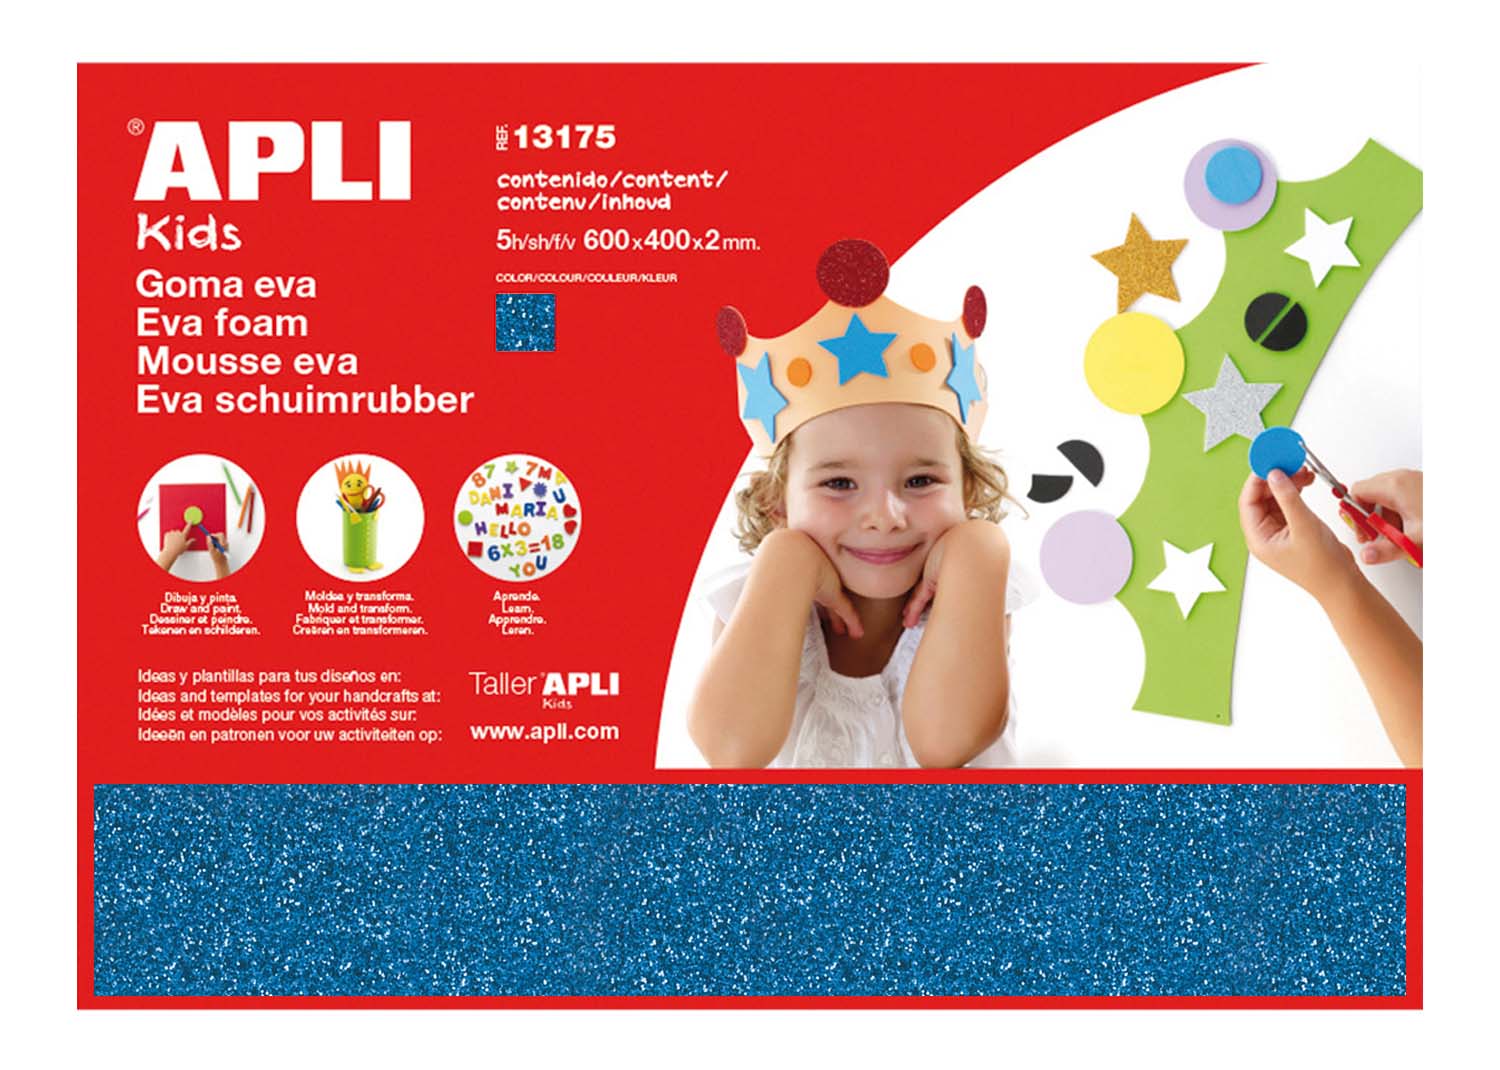 Apli Gomma Crepla Glitter Blu 3 fogli 60cmx40cm - Necchi Shop Online